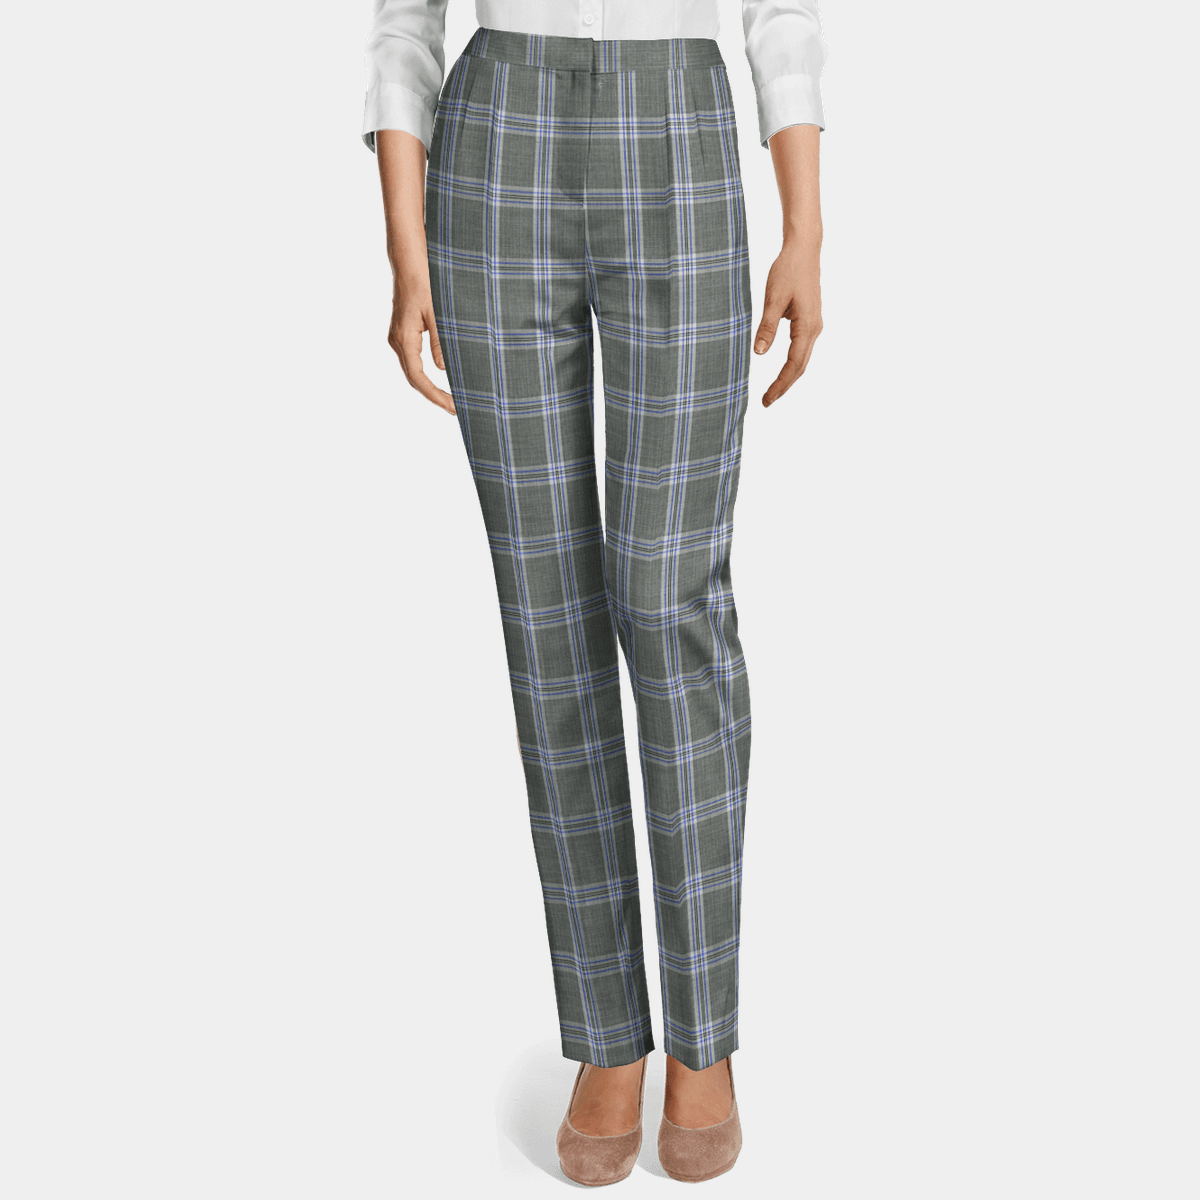 high waisted grey plaid pants